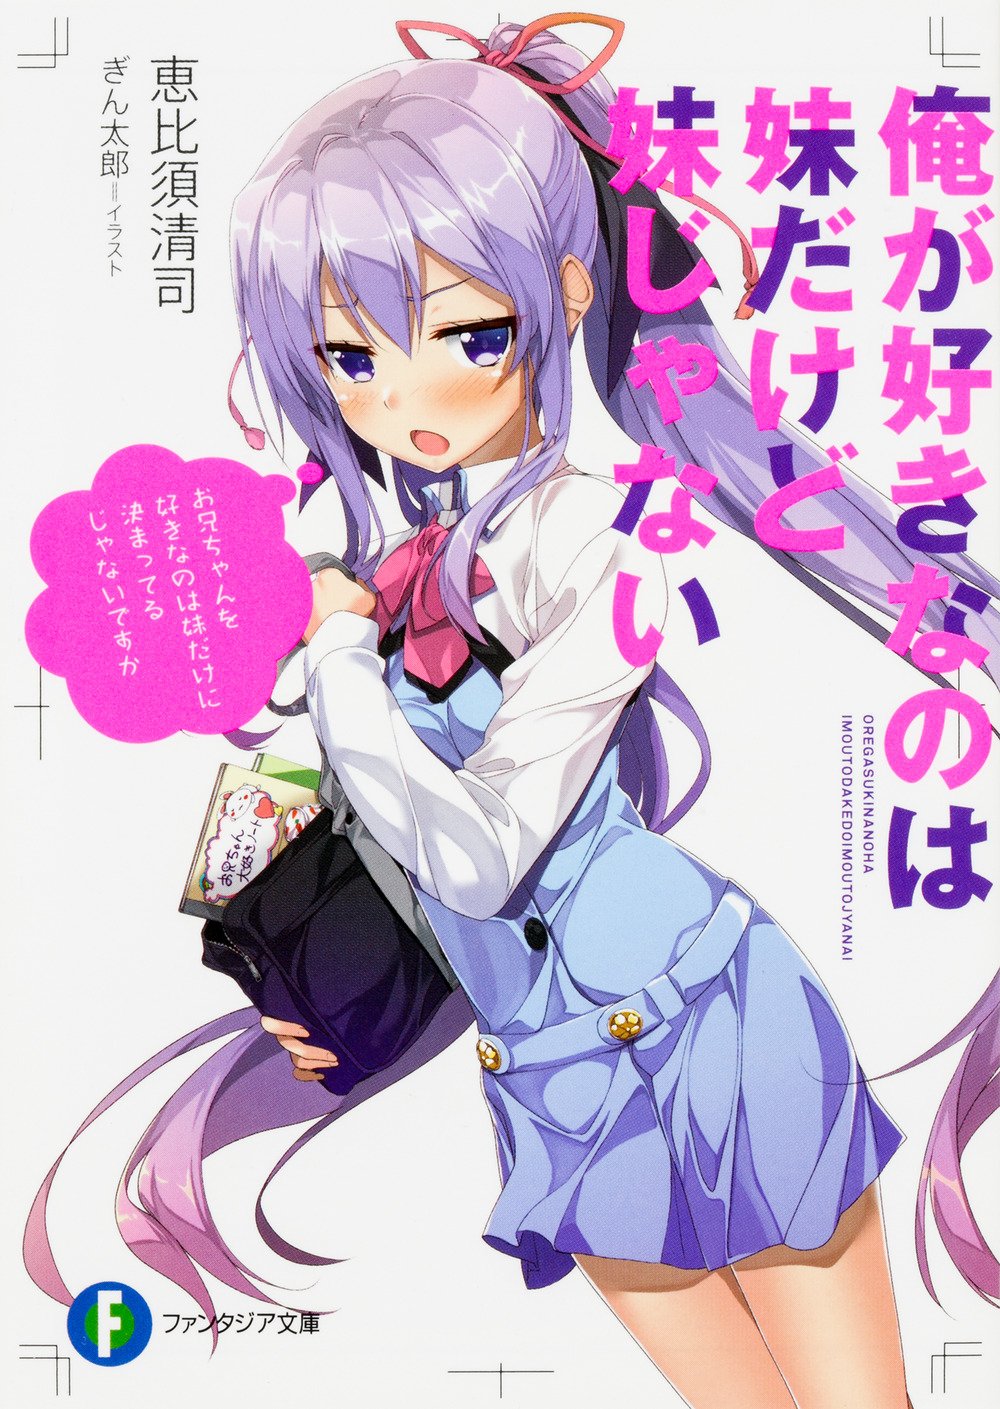 Ore wo Suki nano wa Omae Dake ka yo Light Novels Get TV Anime - News - Anime  News Network